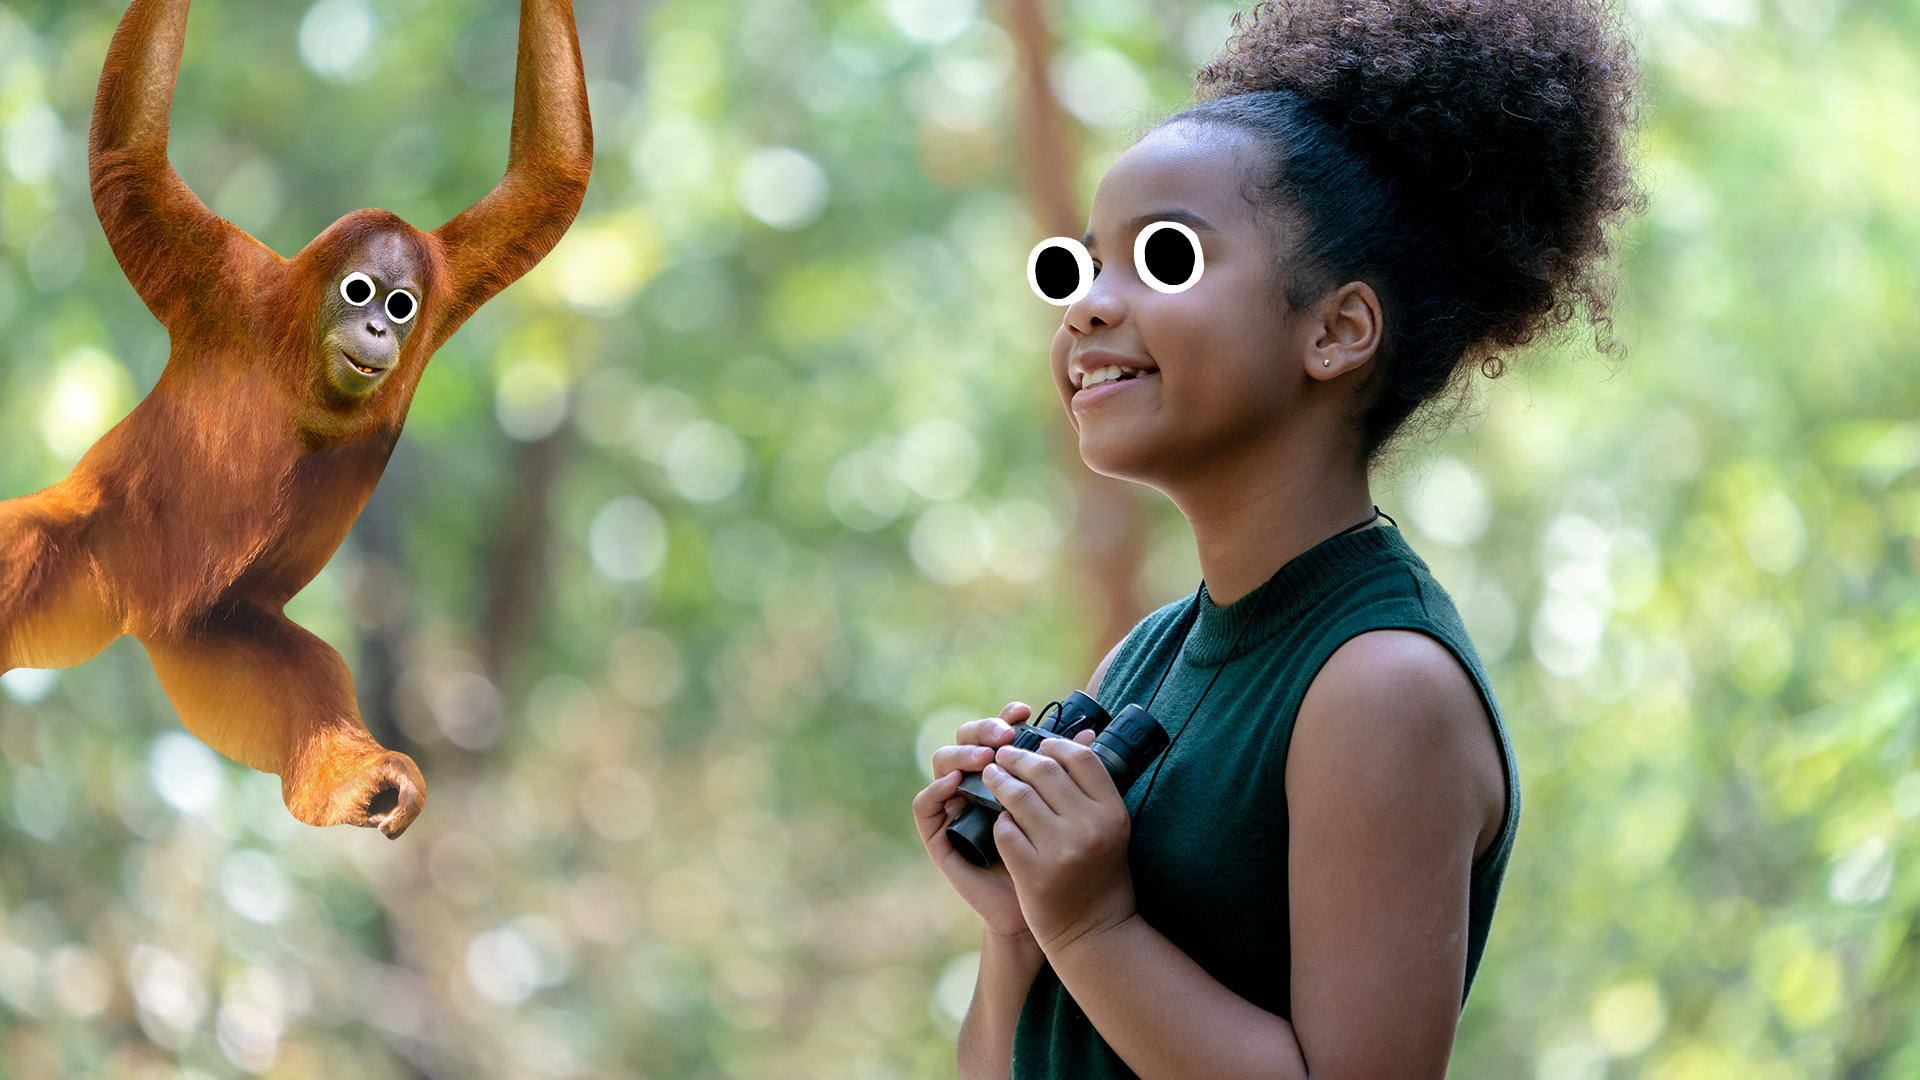 Girl with binoculars looks at goody orangutan 